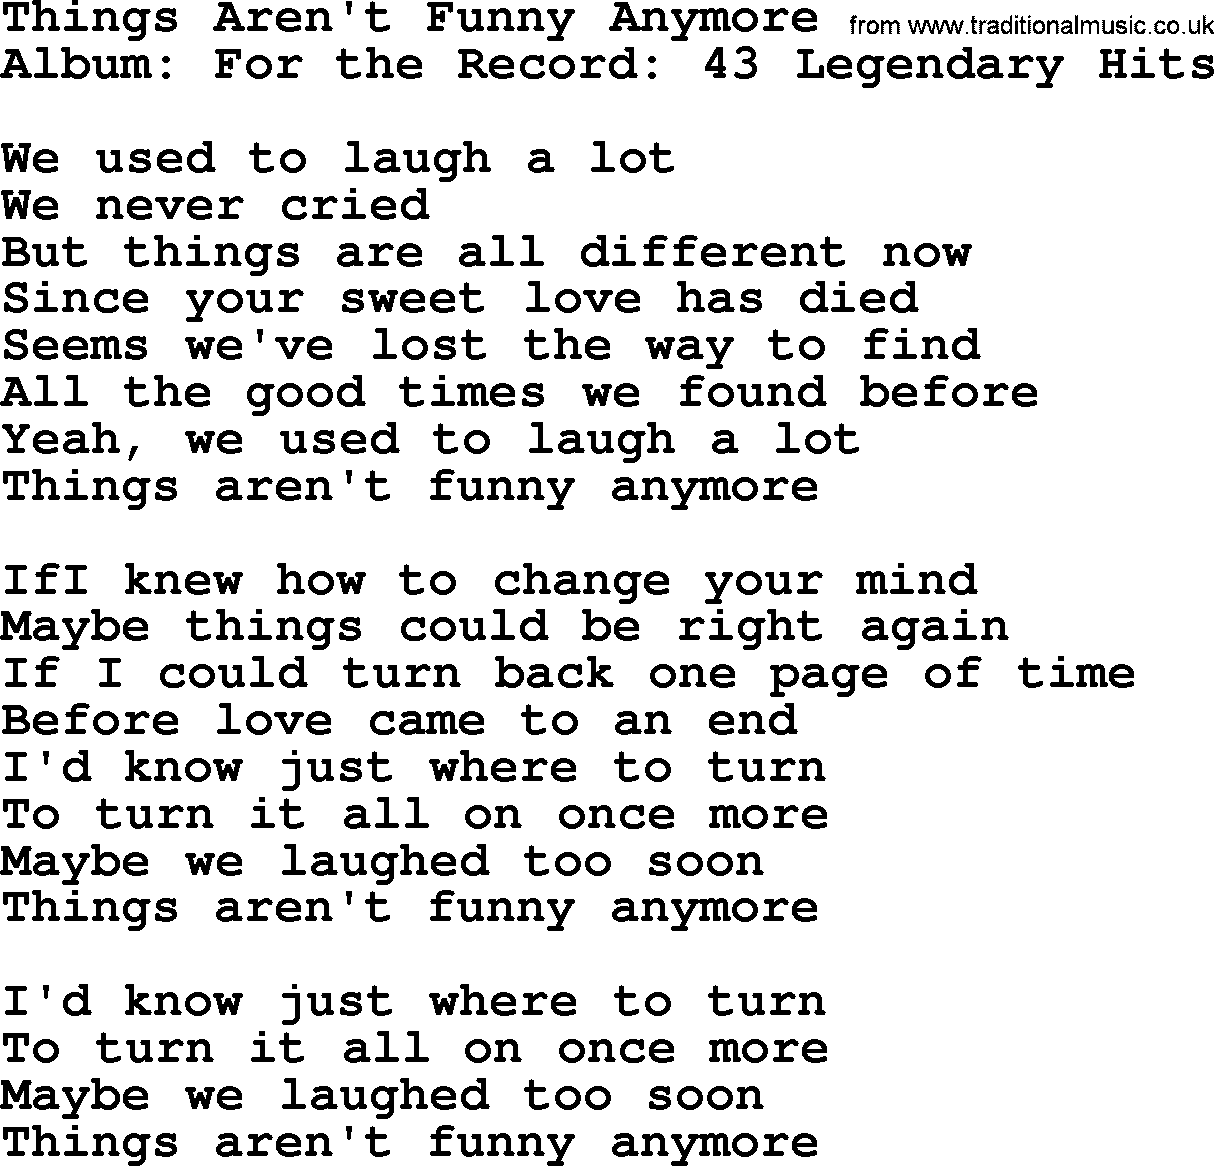 Merle Haggard song: Things Aren't Funny Anymore, lyrics.